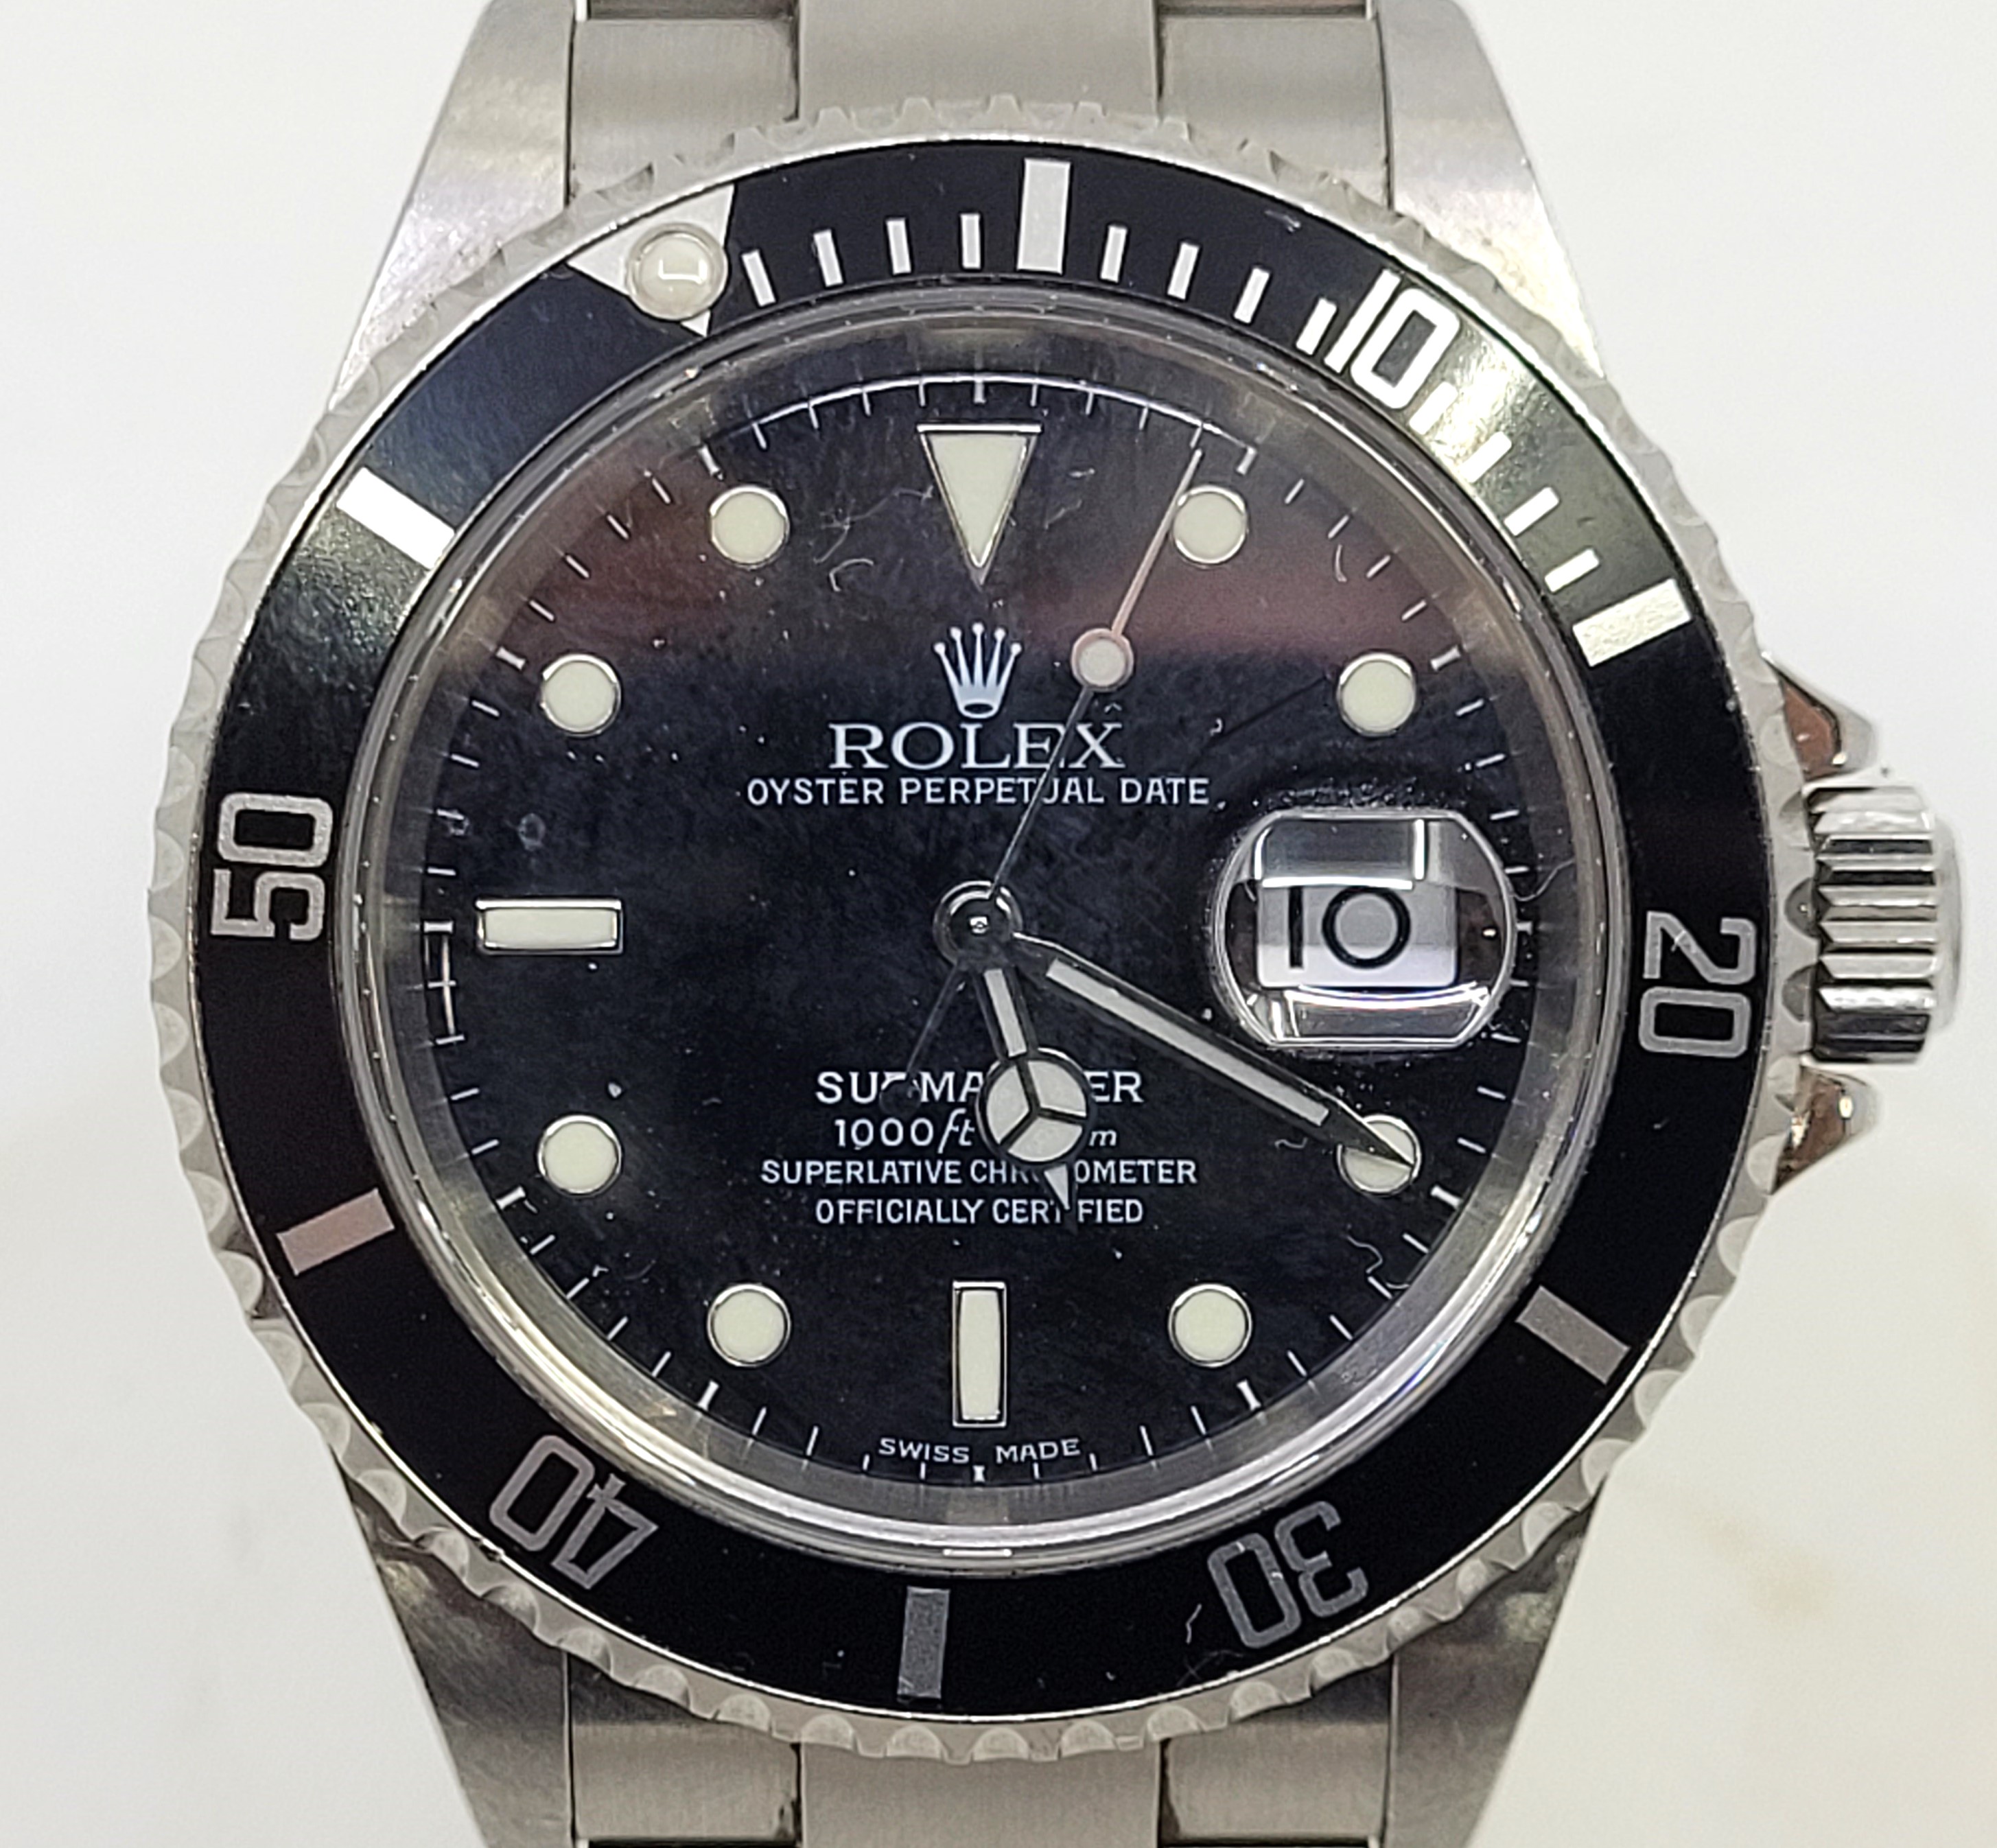 Rolex Oyster Perpetual Date "Submariner" Superlative Chronometer stainless steel gentleman's